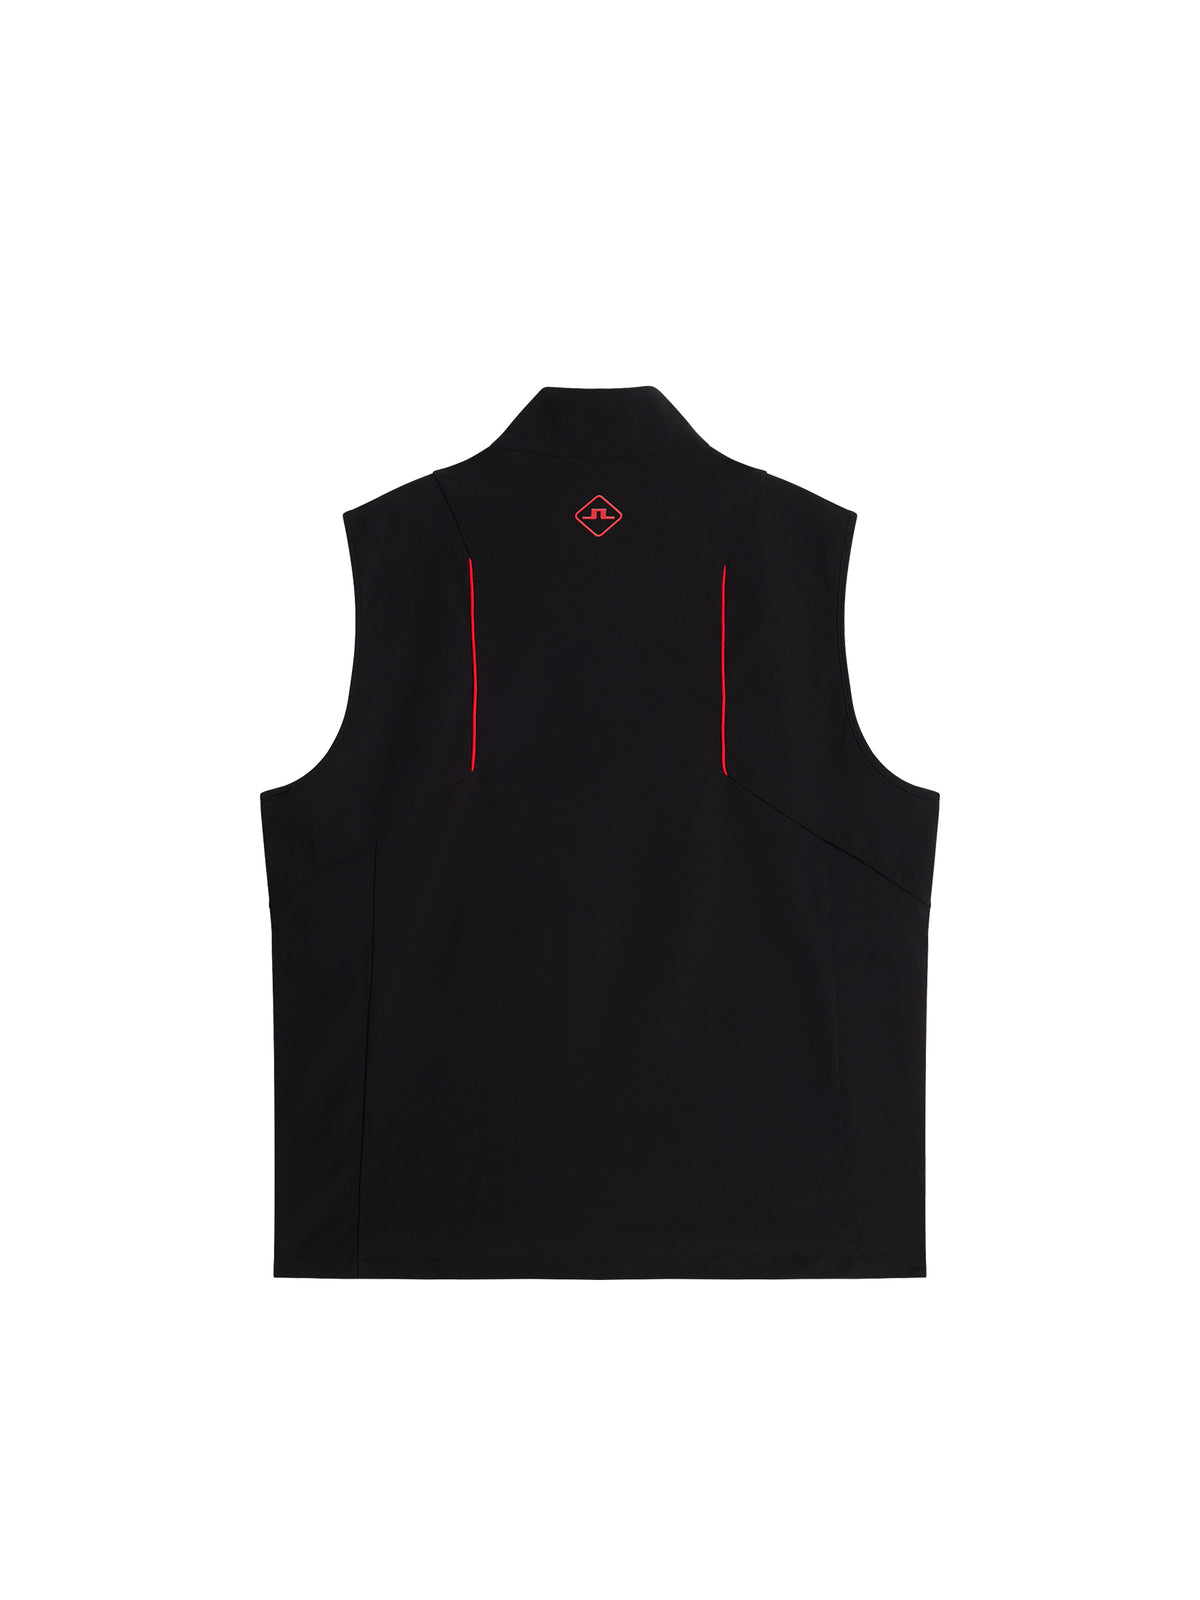 Dexter Hybrid vest / Black